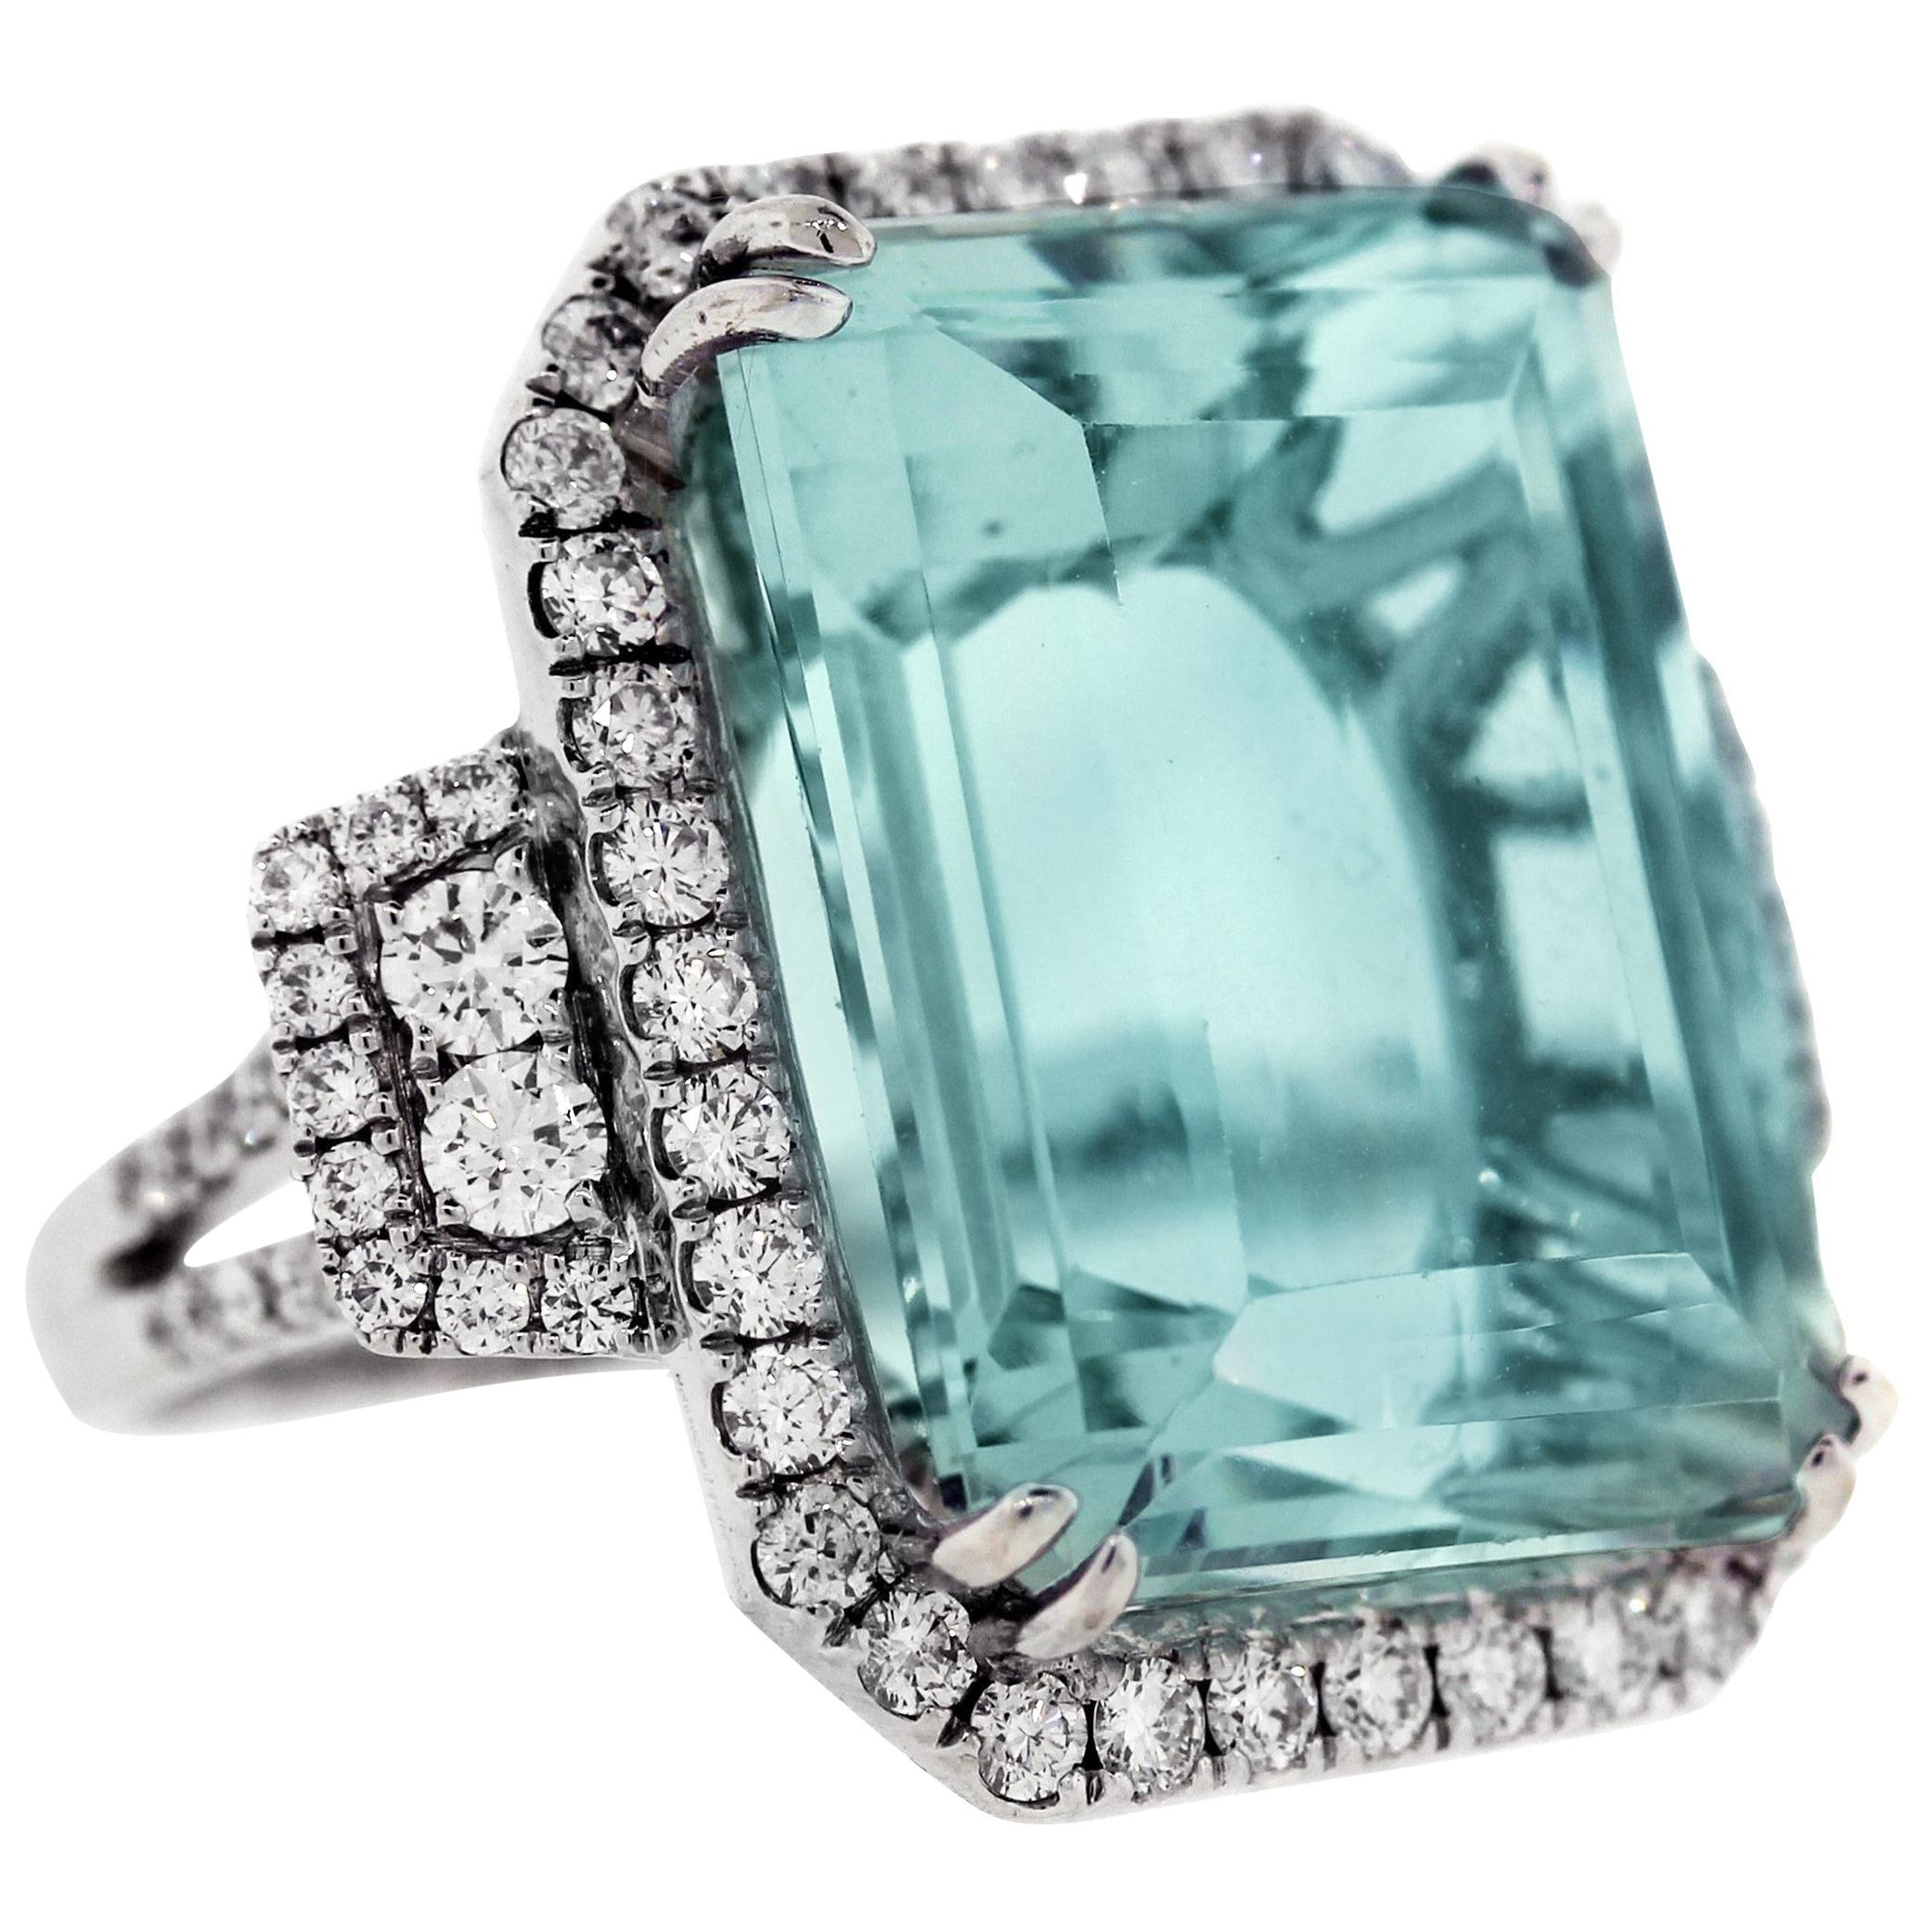 23.10 Carat Emerald Cut Aquamarine Diamonds 18 Karat White Gold Cocktail Ring